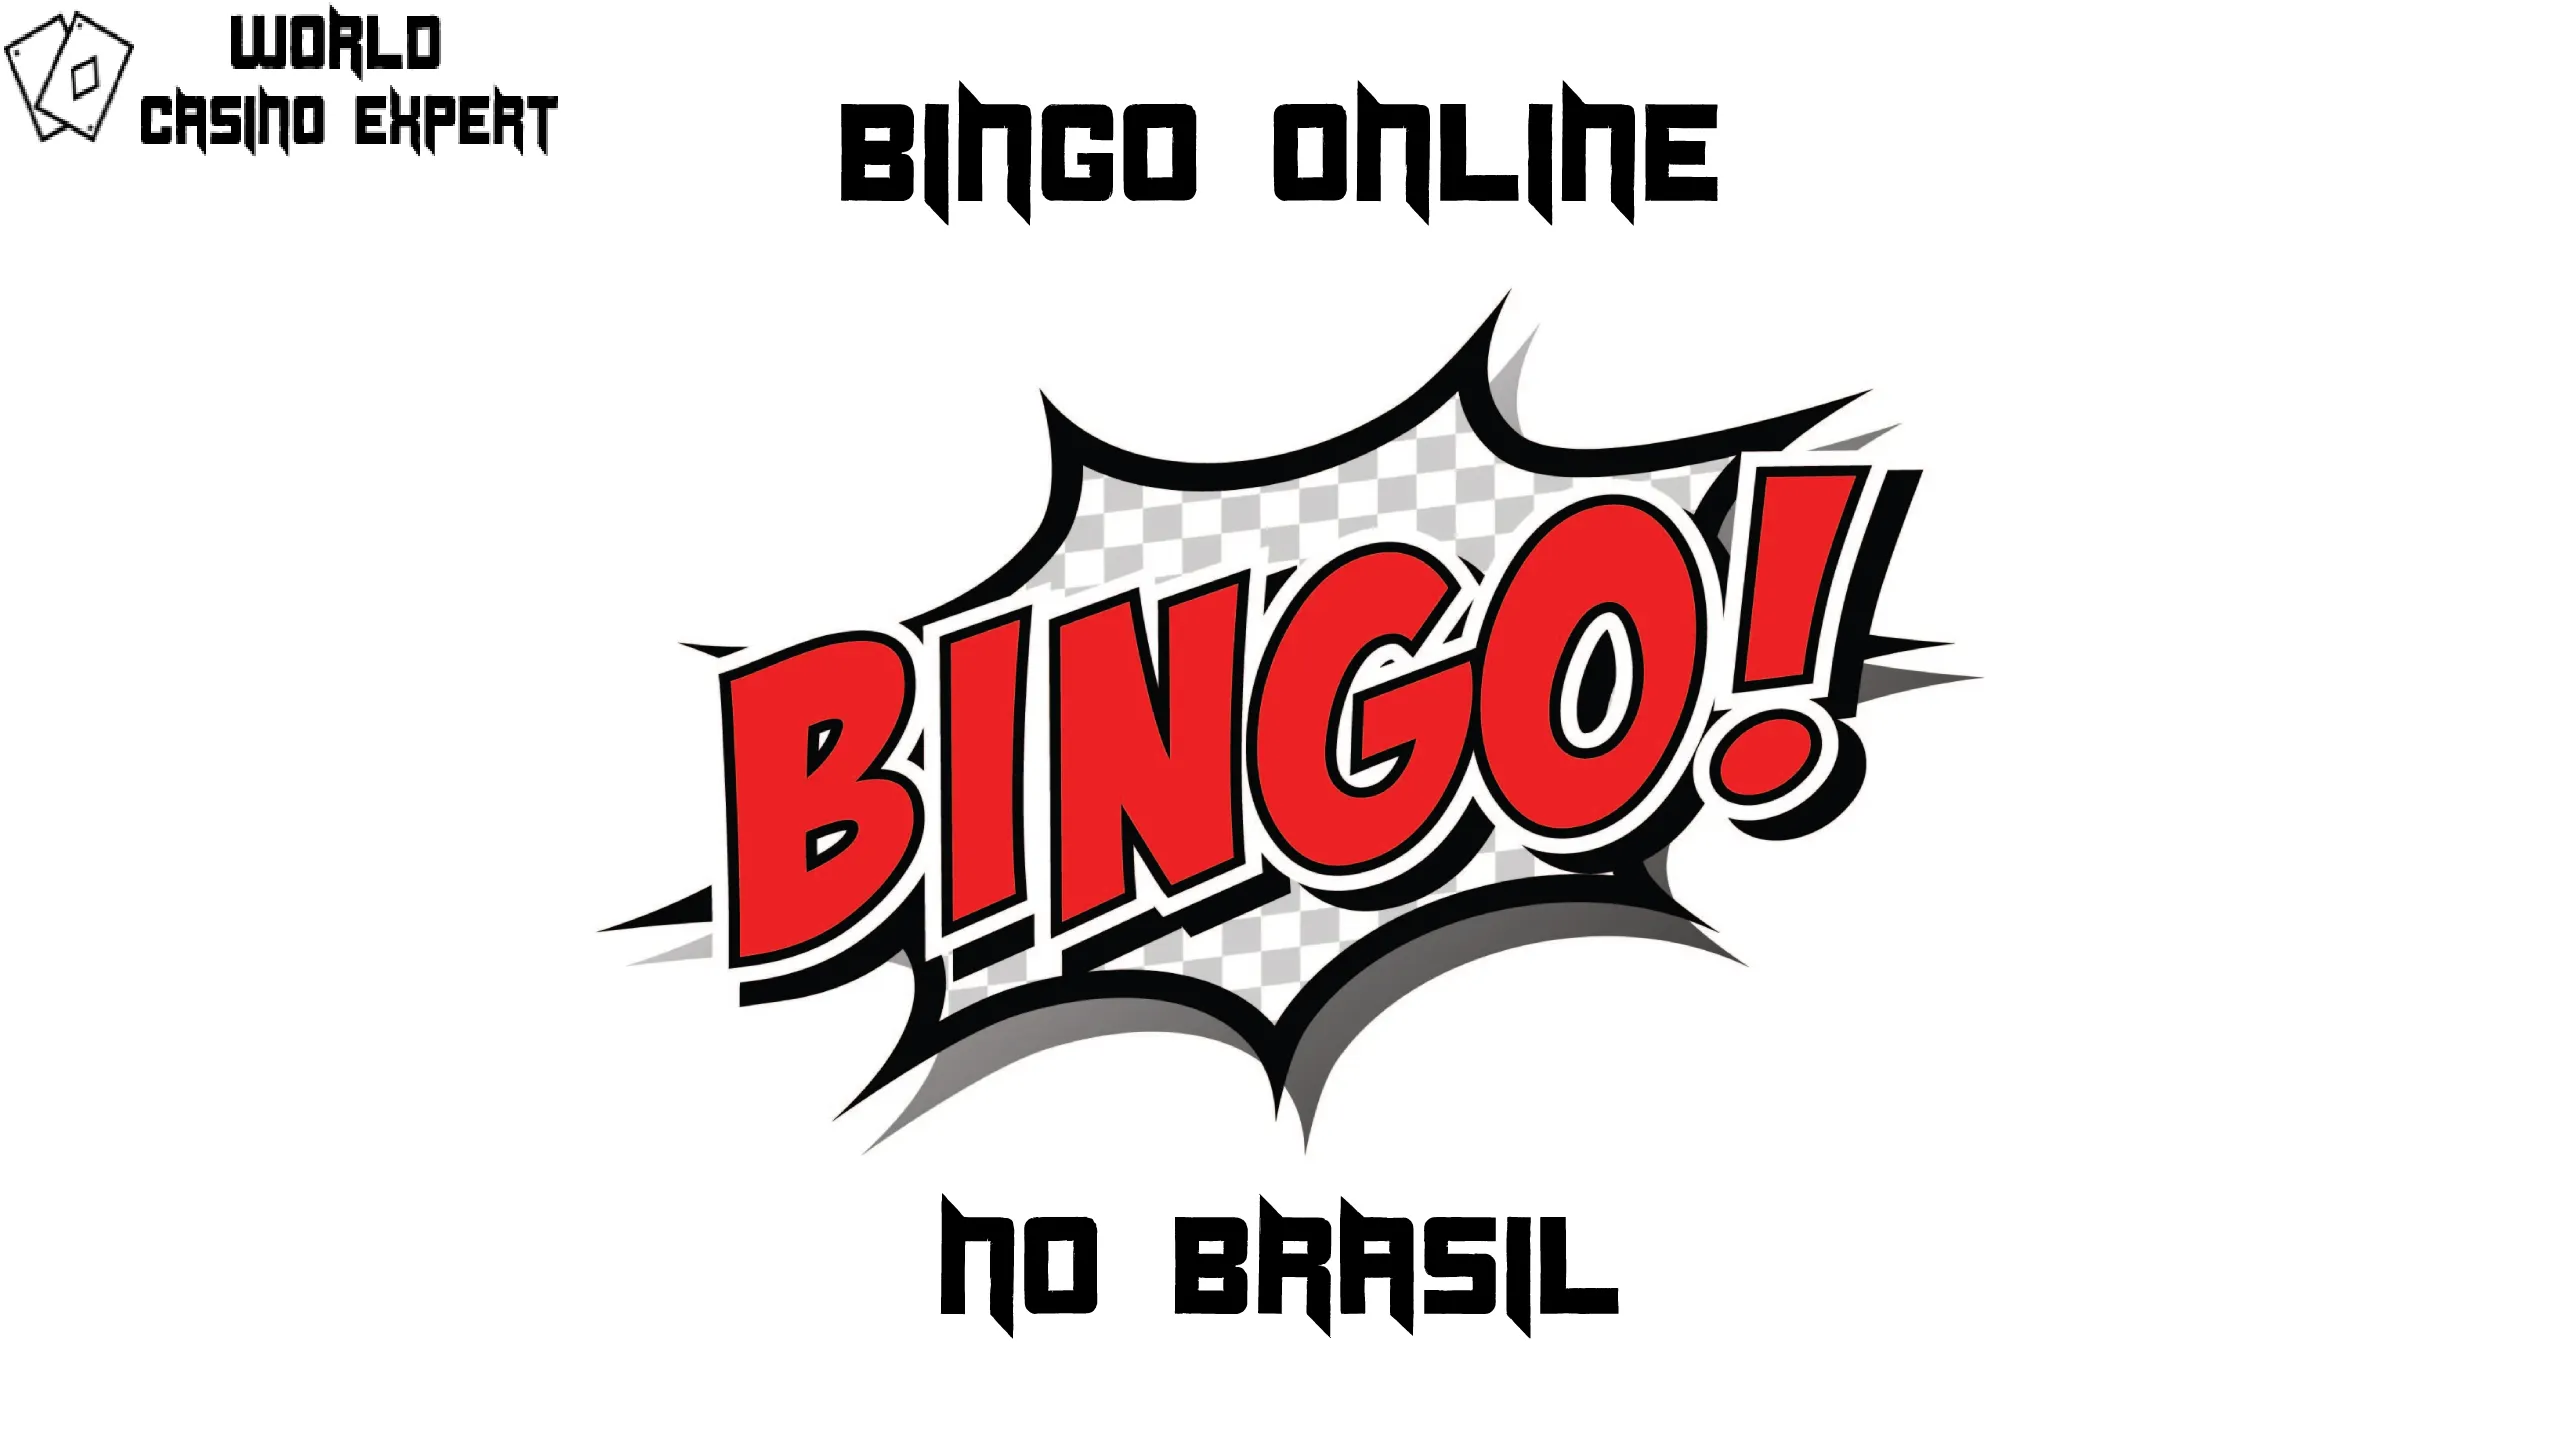 Bingo Online no Brasil | World Casino Expert